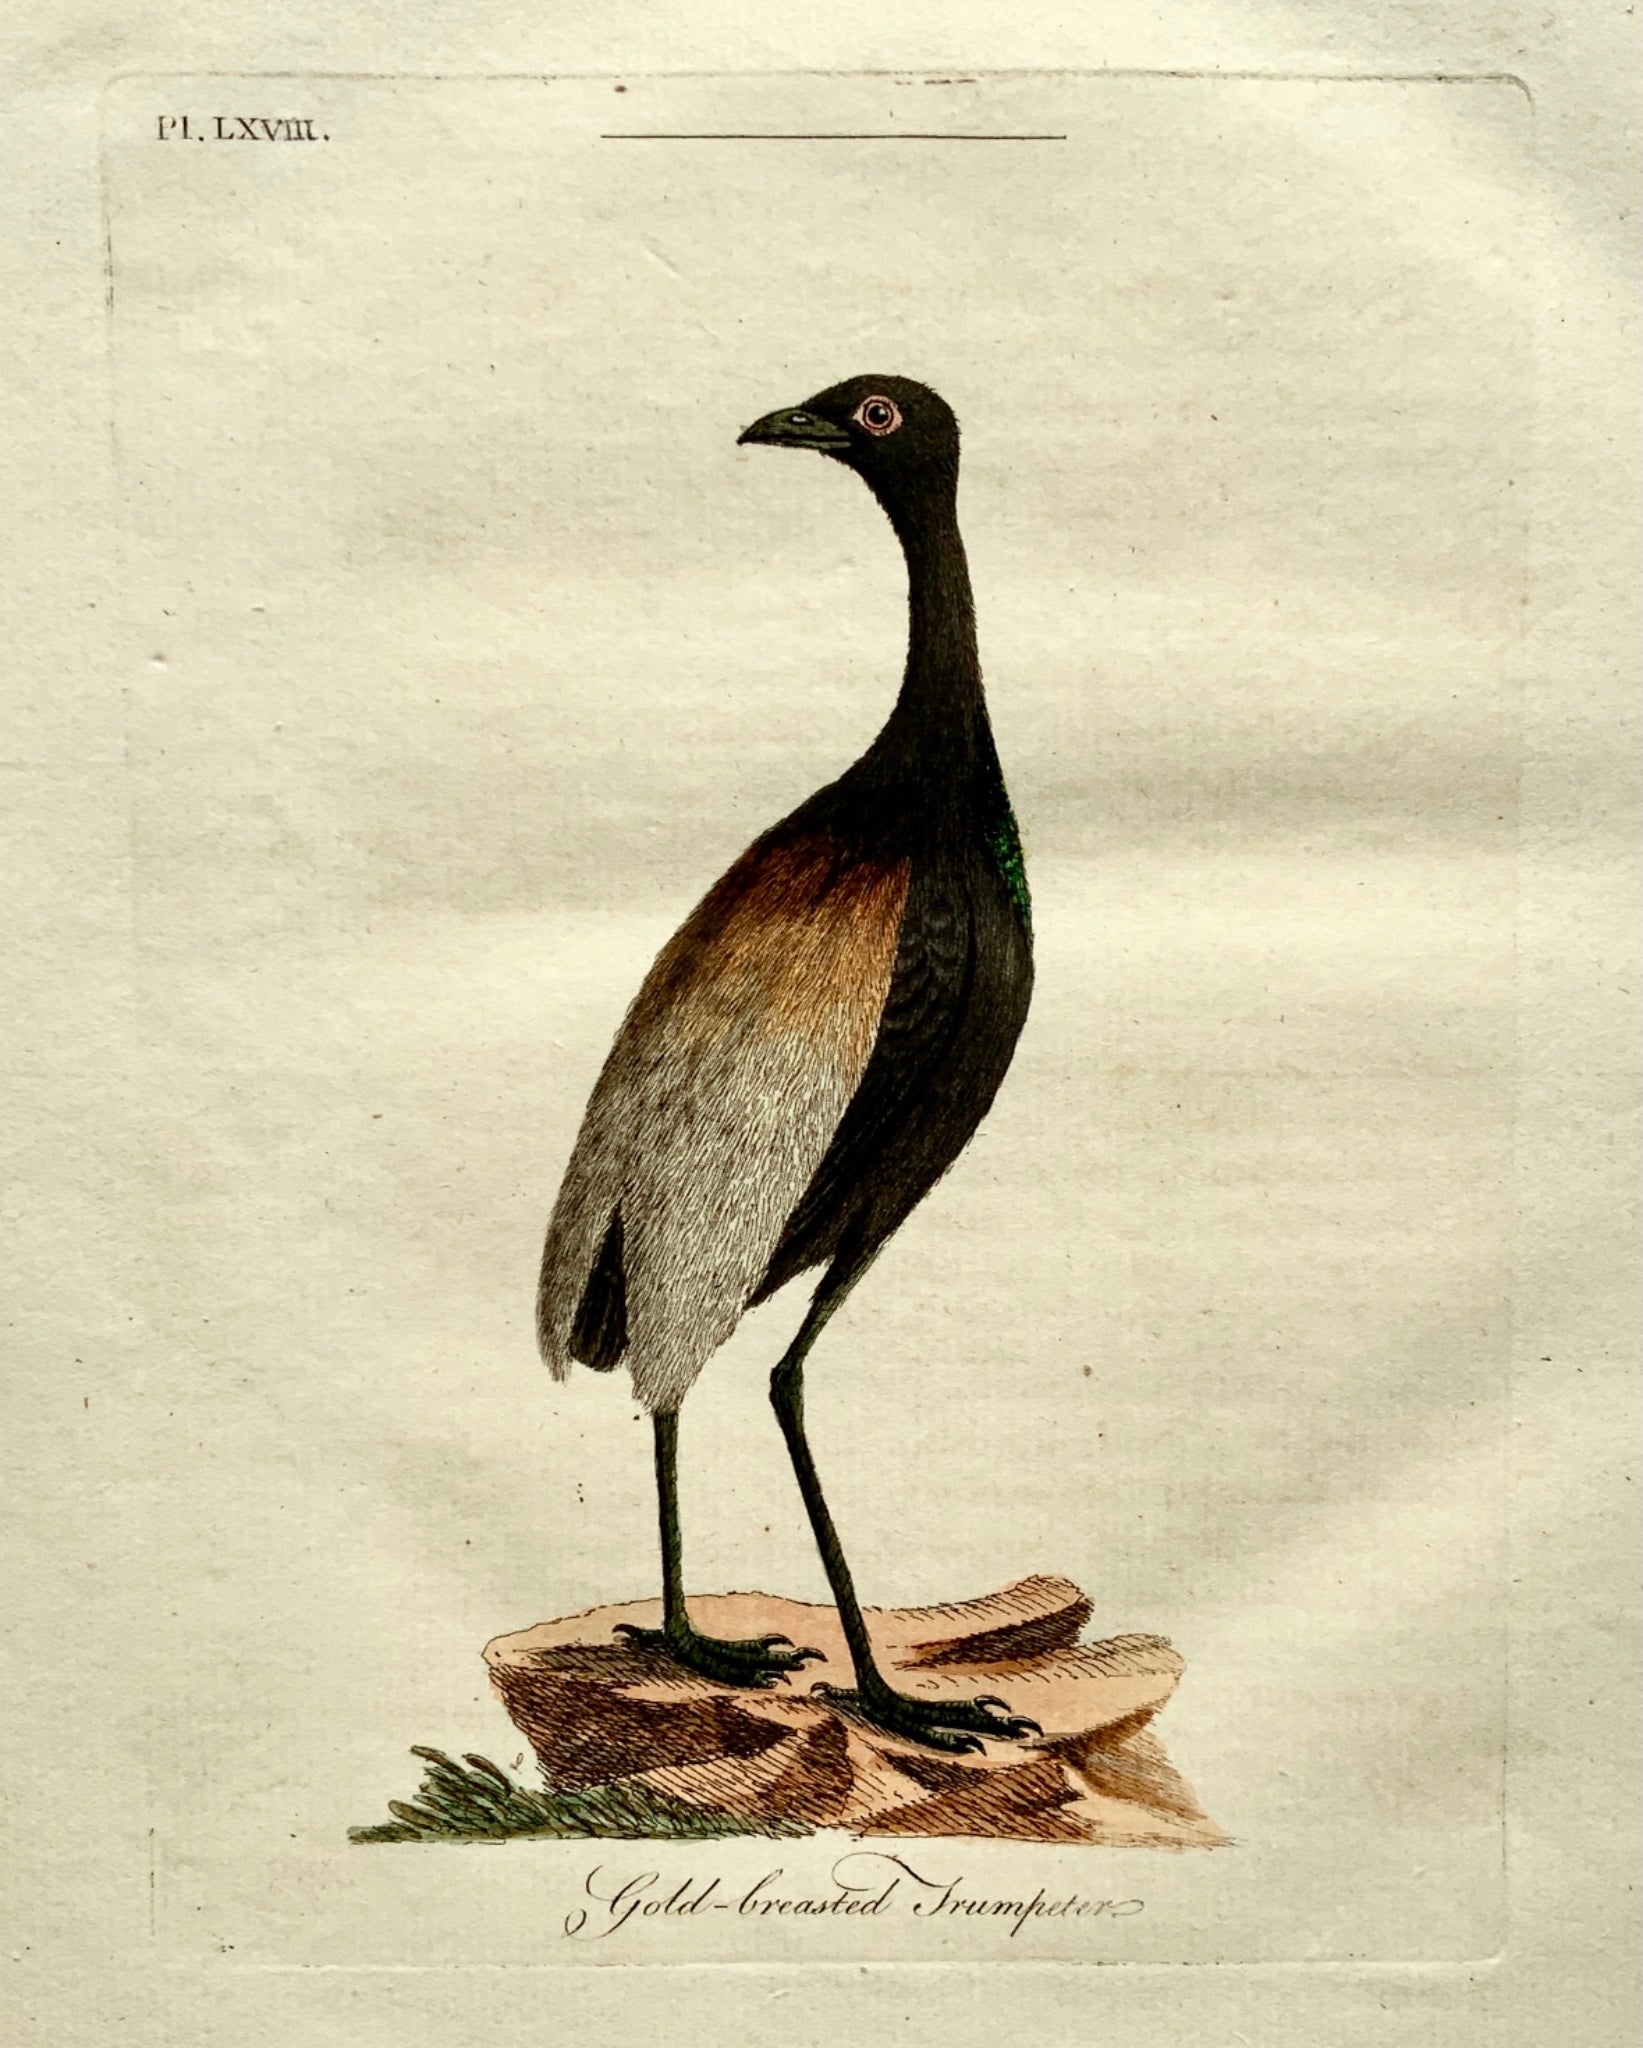 1785 John Latham - Synopsis - GOLD BREASTED TRUMPETER Ornithology - hand coloured